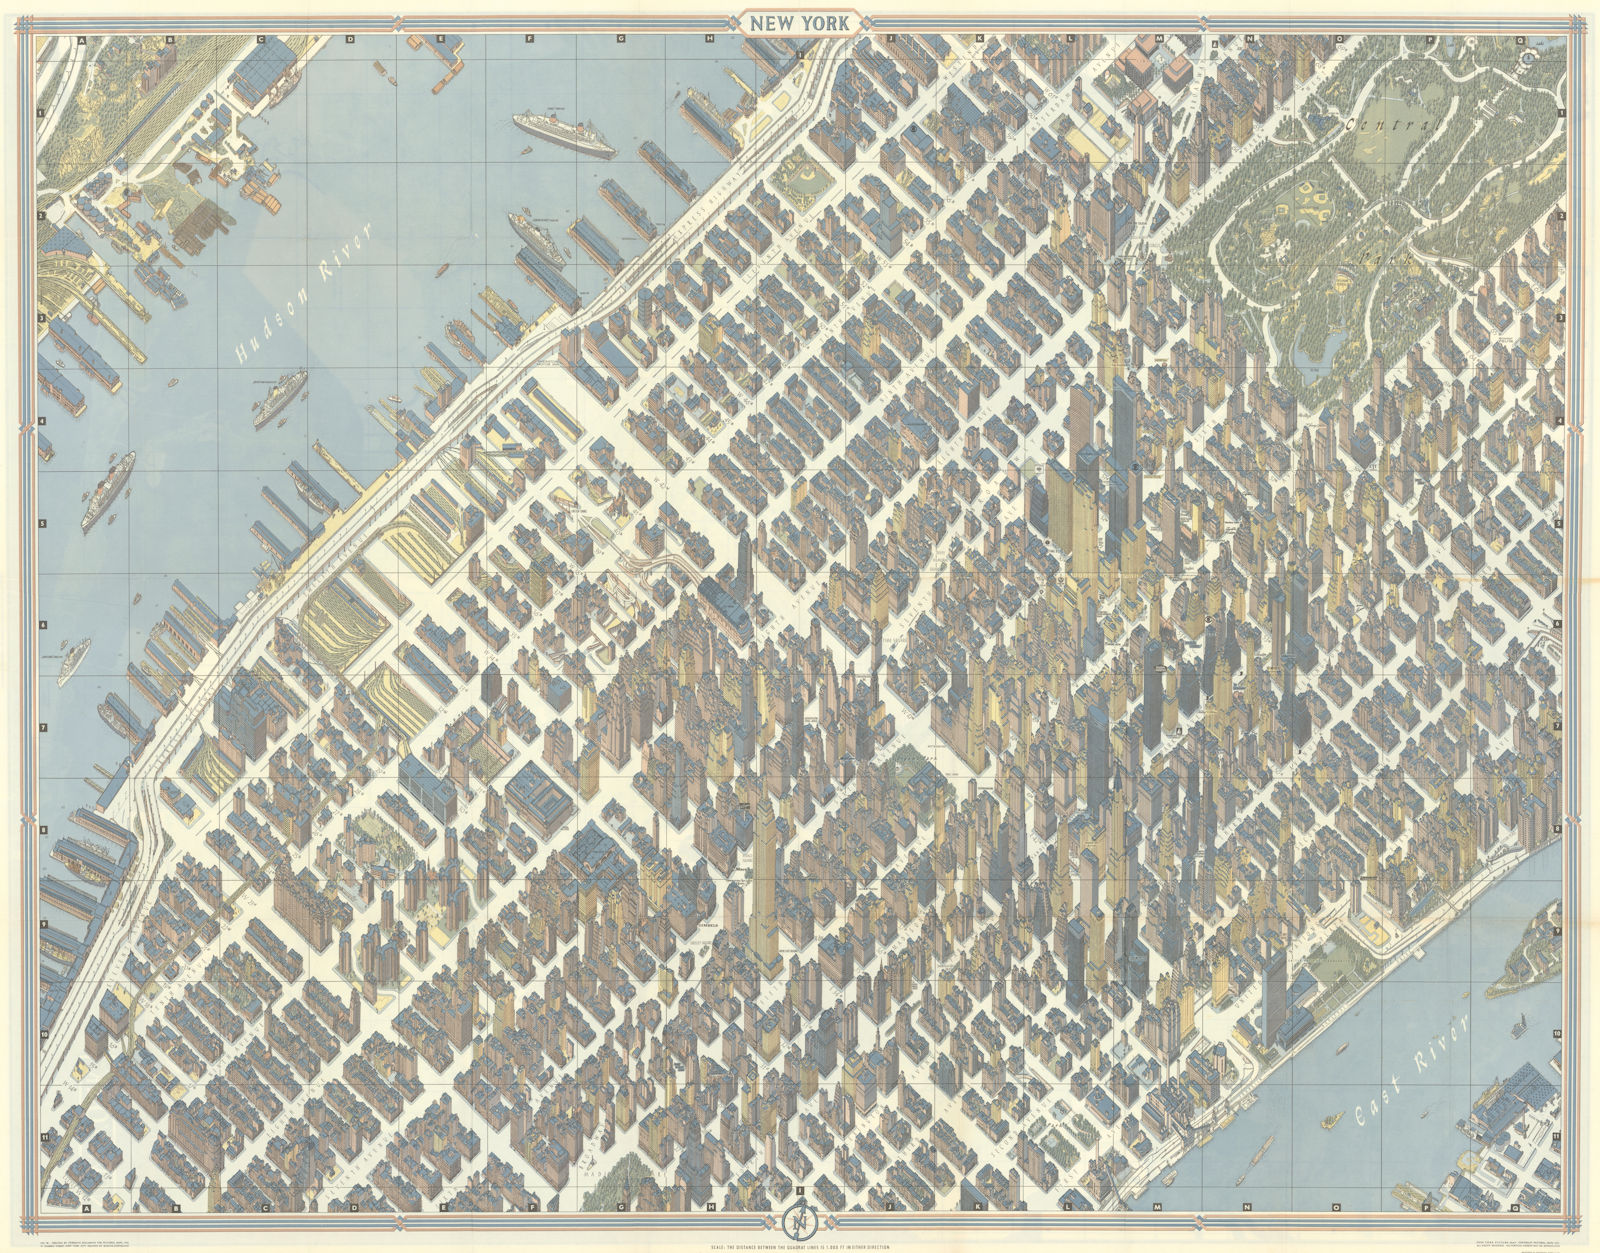 New York pictorial bird's eye view city plan. Manhattan #40 BOLLMANN 1962 map